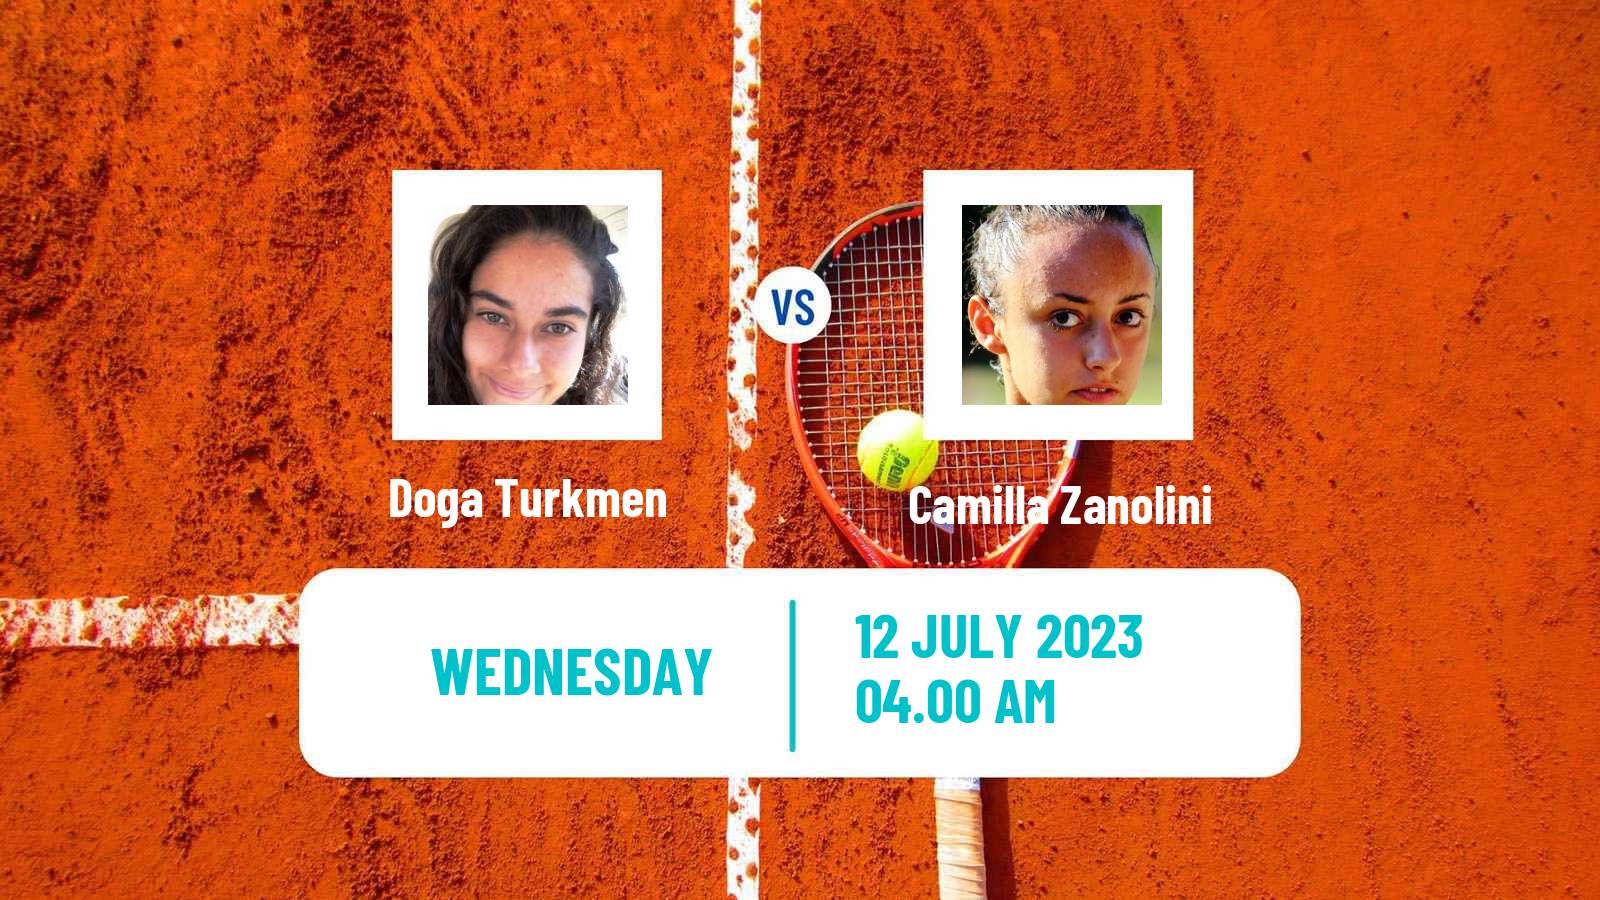 Tennis ITF W15 Monastir 23 Women Doga Turkmen - Camilla Zanolini